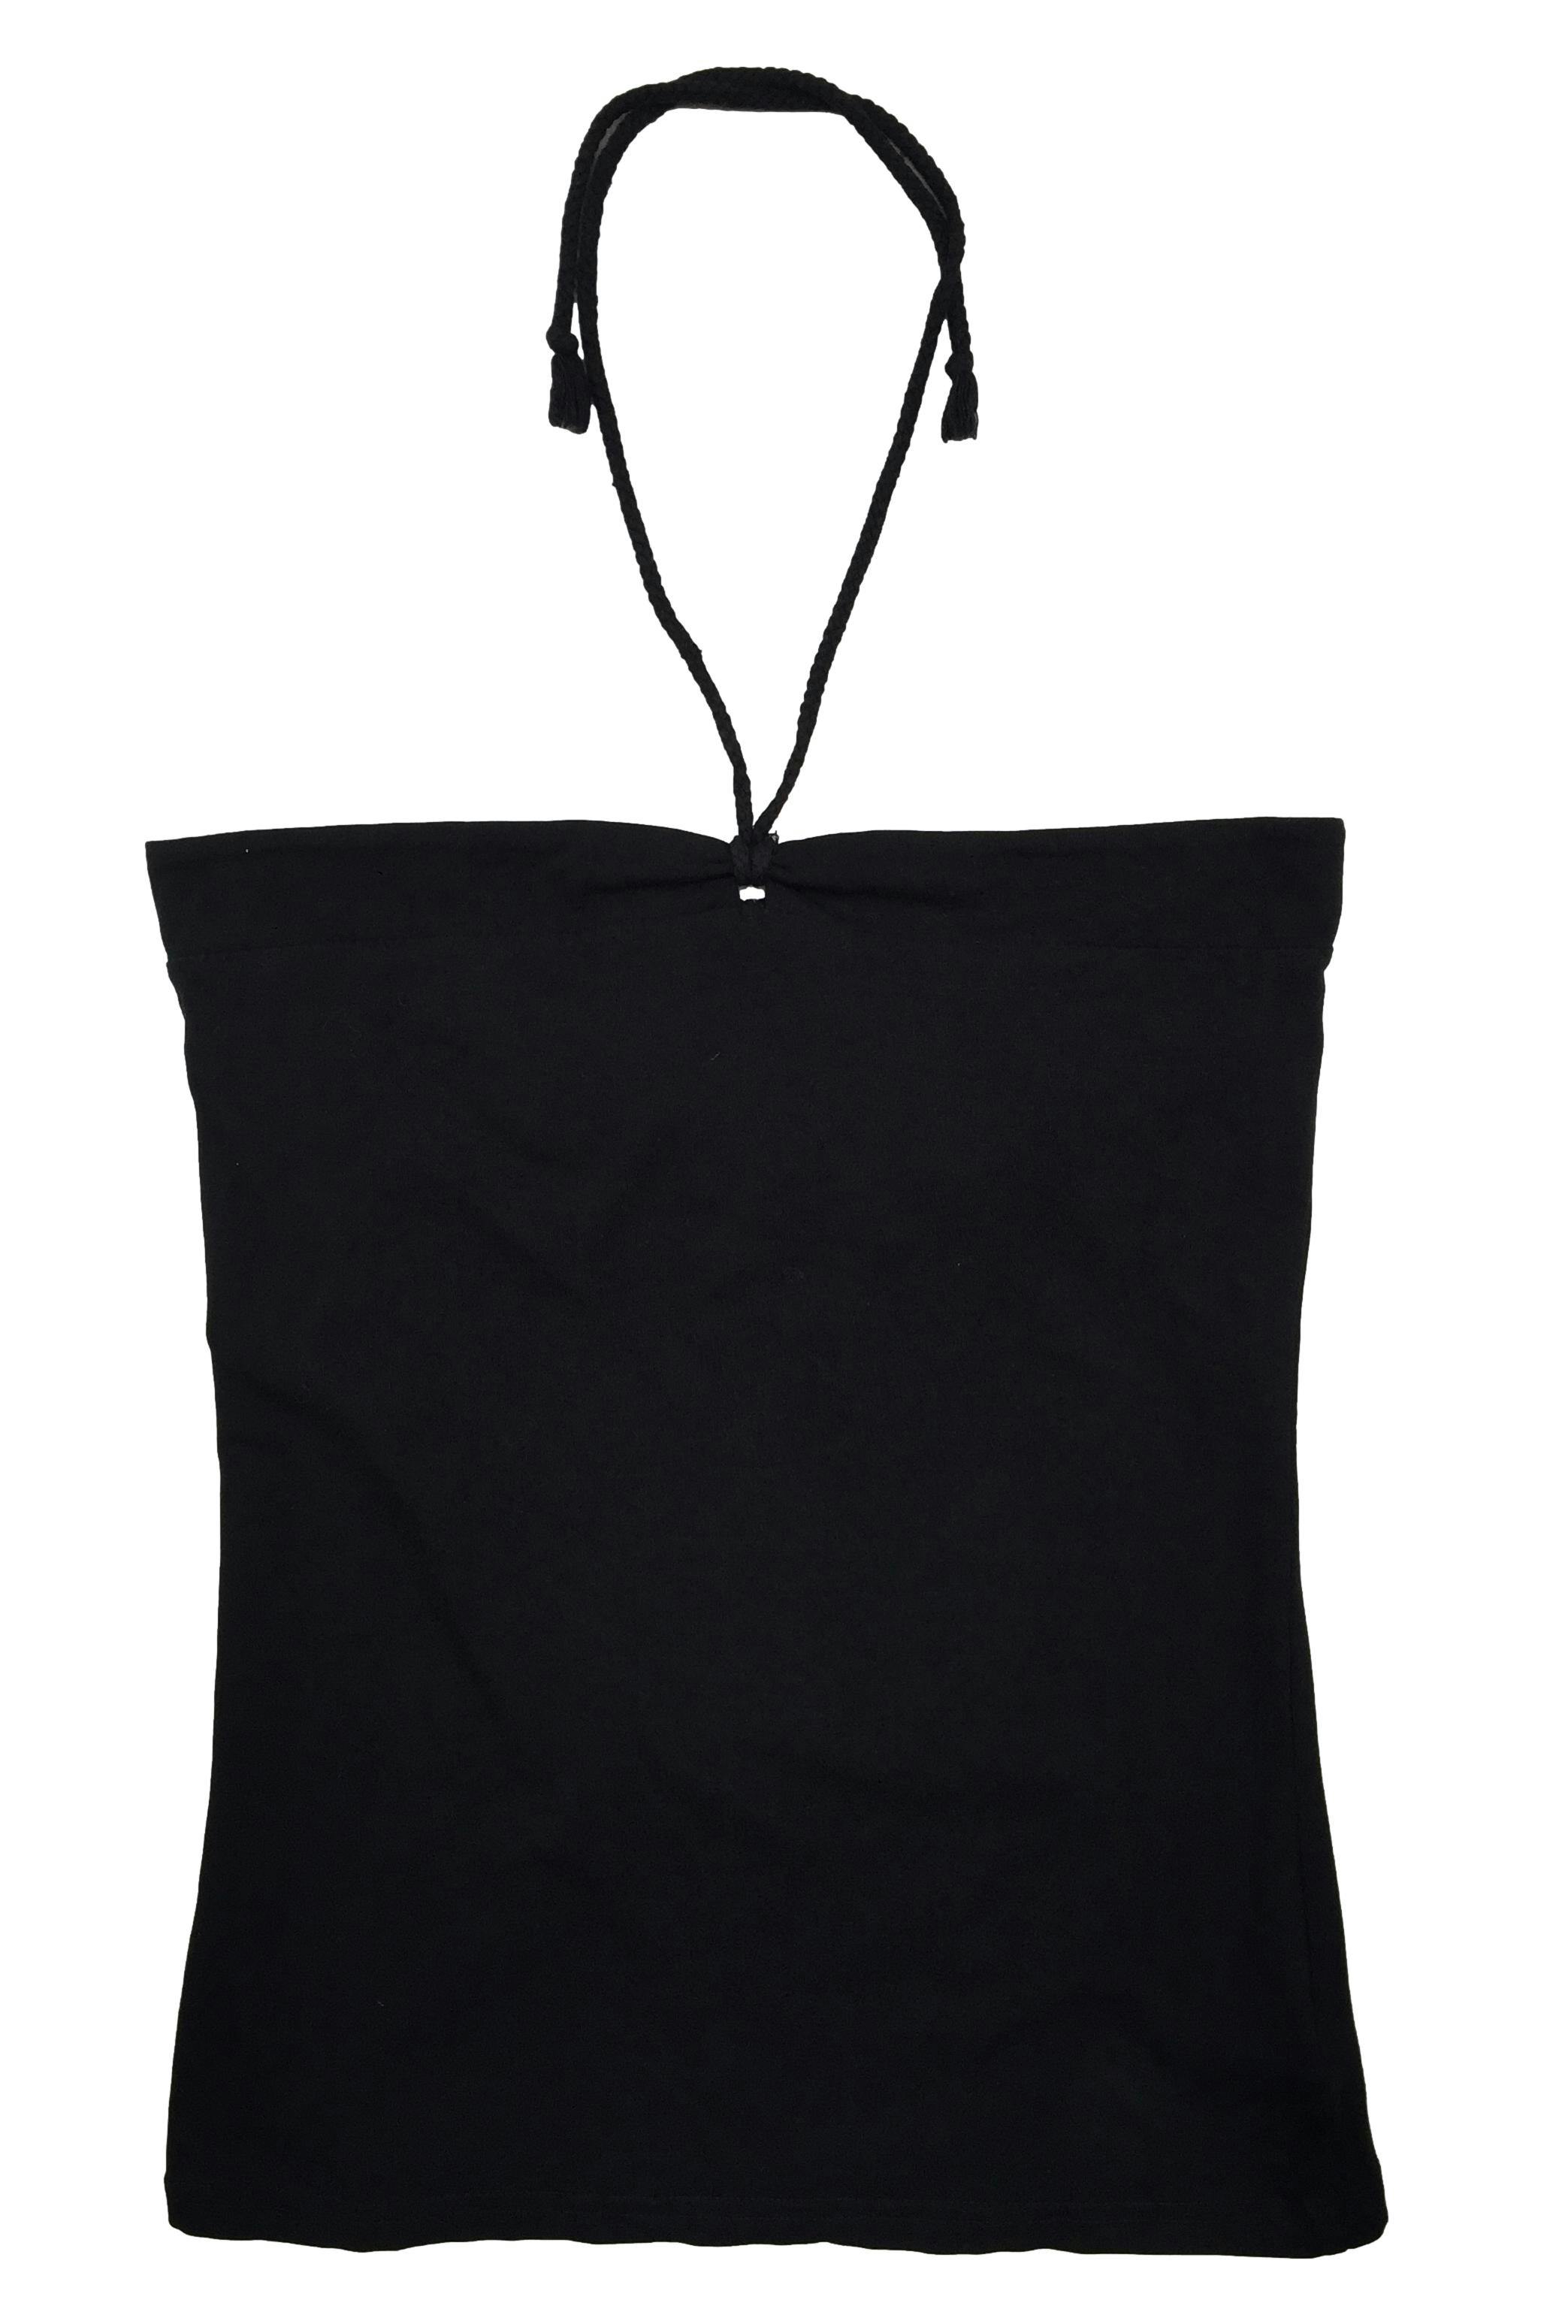 Polo negro strapless 95% algodón con cintos para amarrar al cuello. Busto 74cm sin estirar, Largo 50cm.